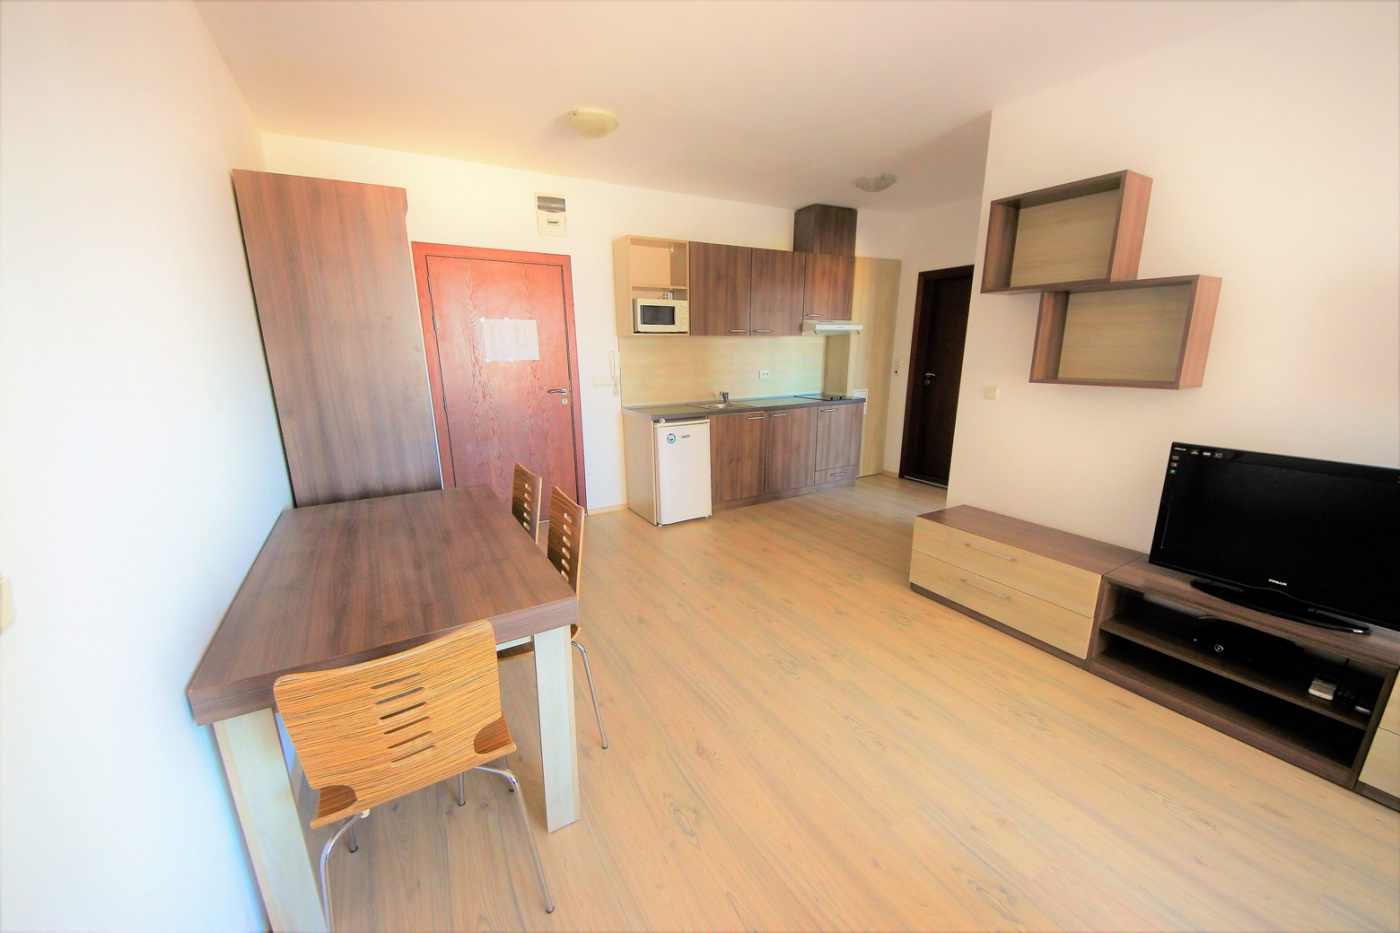 Zornitsa apartment B38